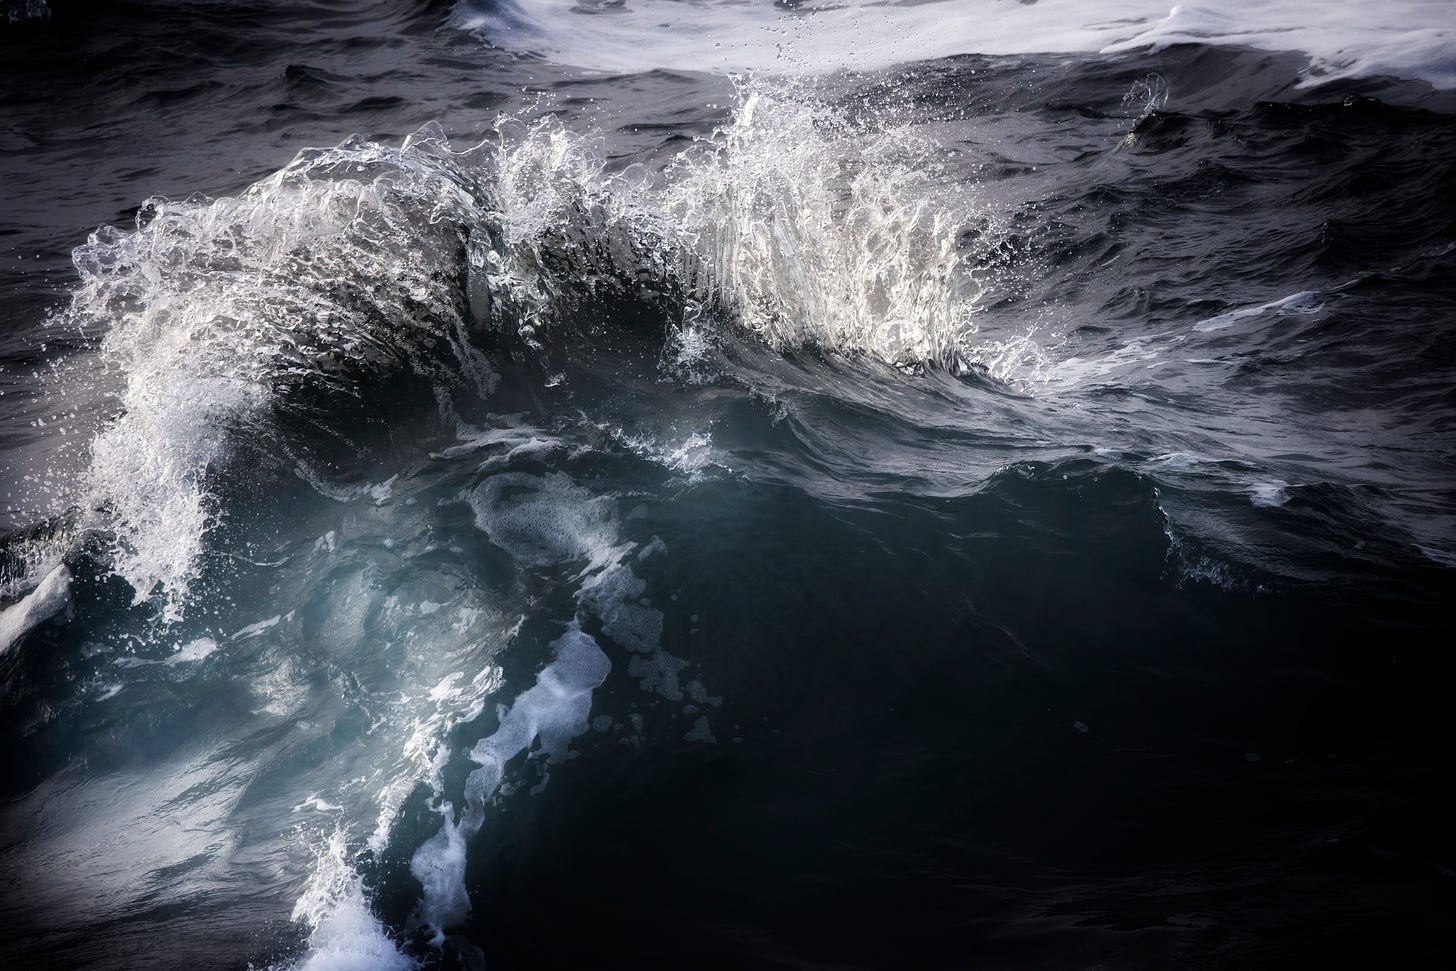 An image of choppy seas